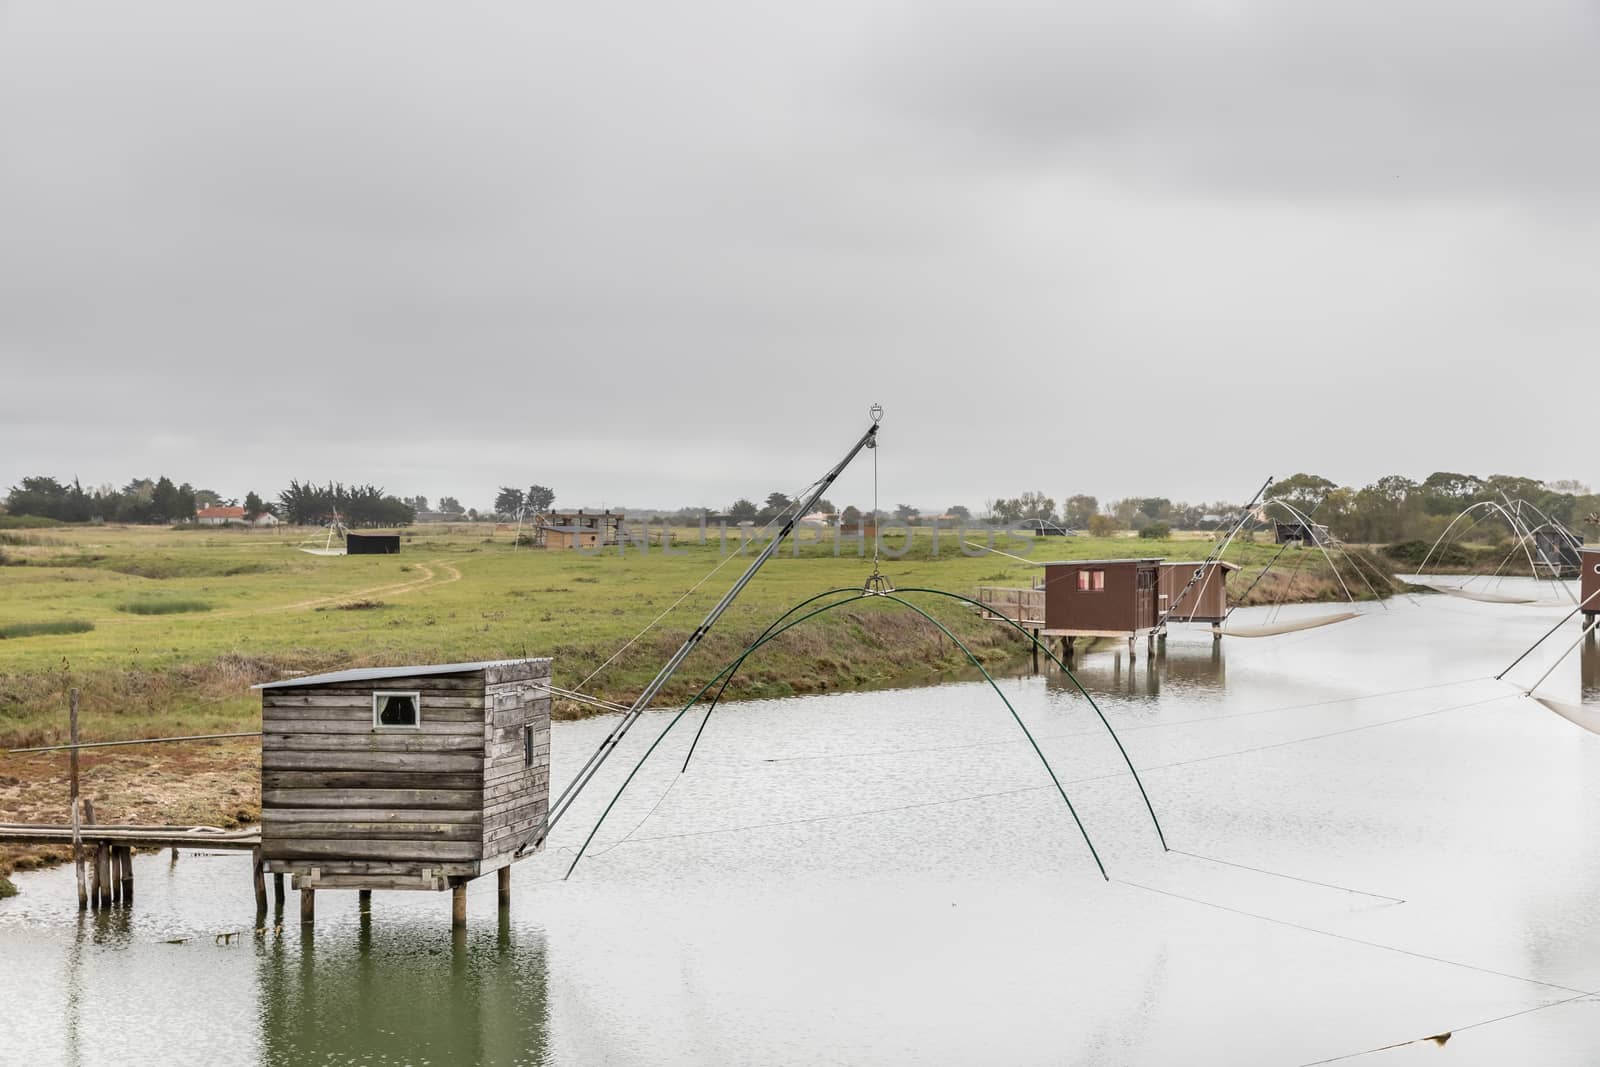 Carrelet de Pêche, the emblematic fisherman's hut of the coastal landscapes of Vendee, Charente-Maritime, in the estuary of La Gironde, La Charente, La Loire or in the Marais Poitevin